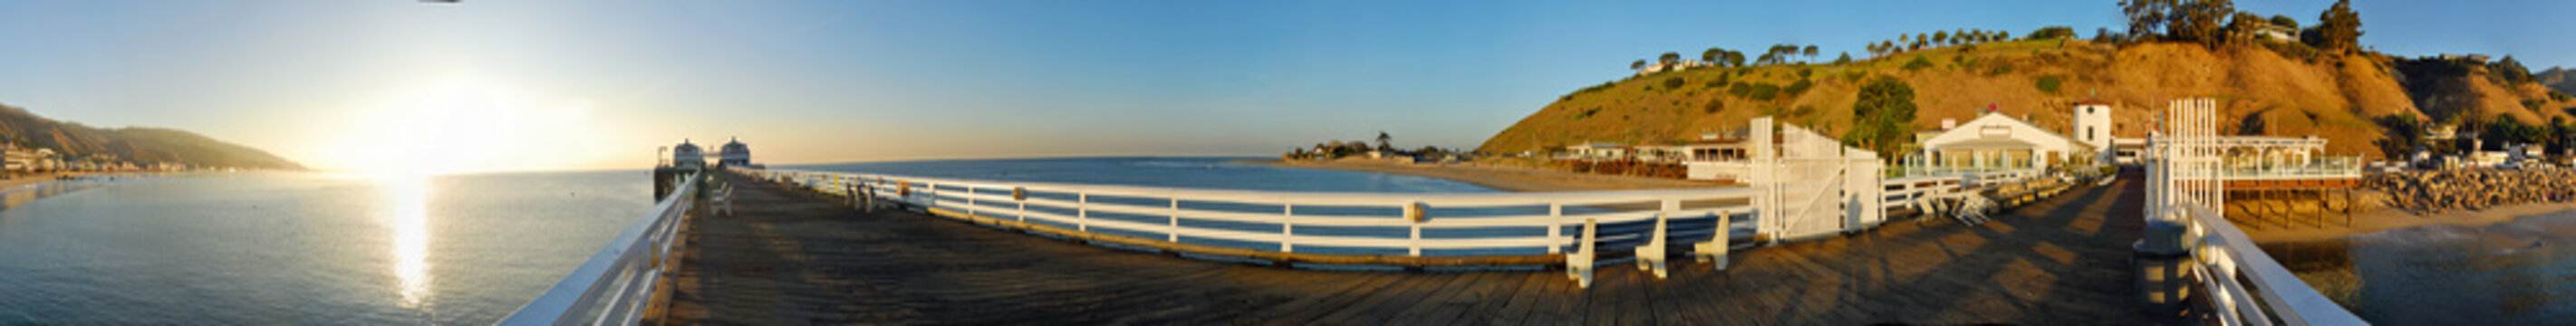 360 degree panorama of the Malibu pier.